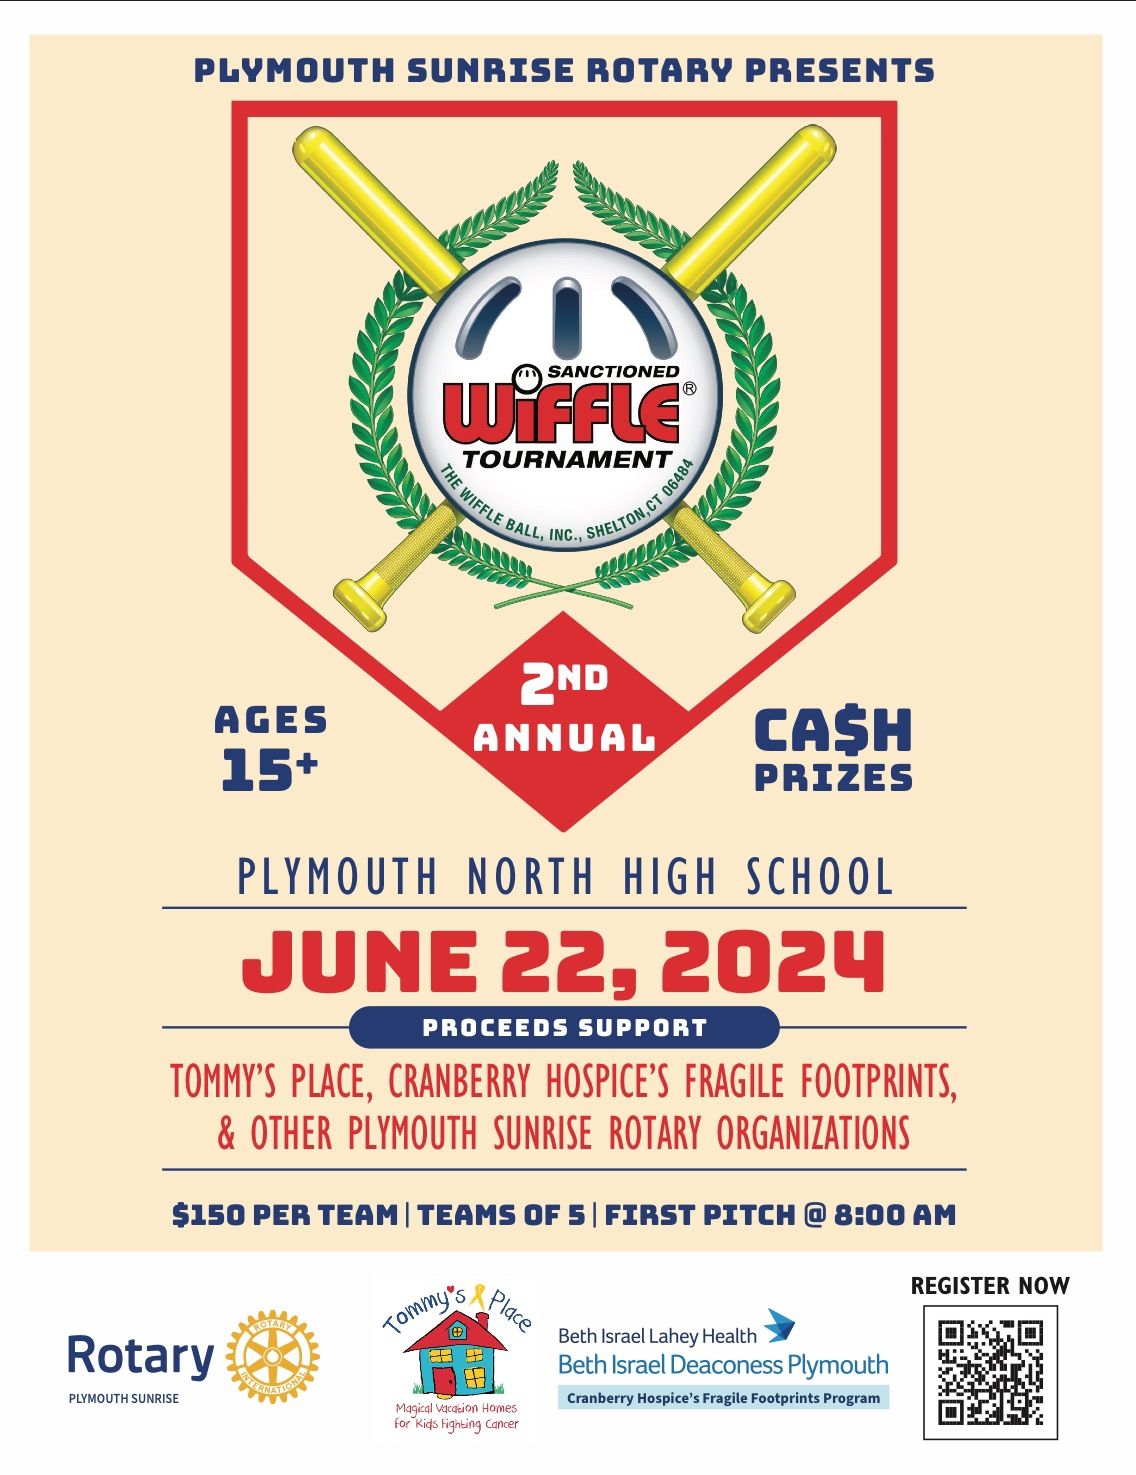 Plymouth Sunrise Rotary\u2019s 2nd Annual Wiffle Ball Tournament 